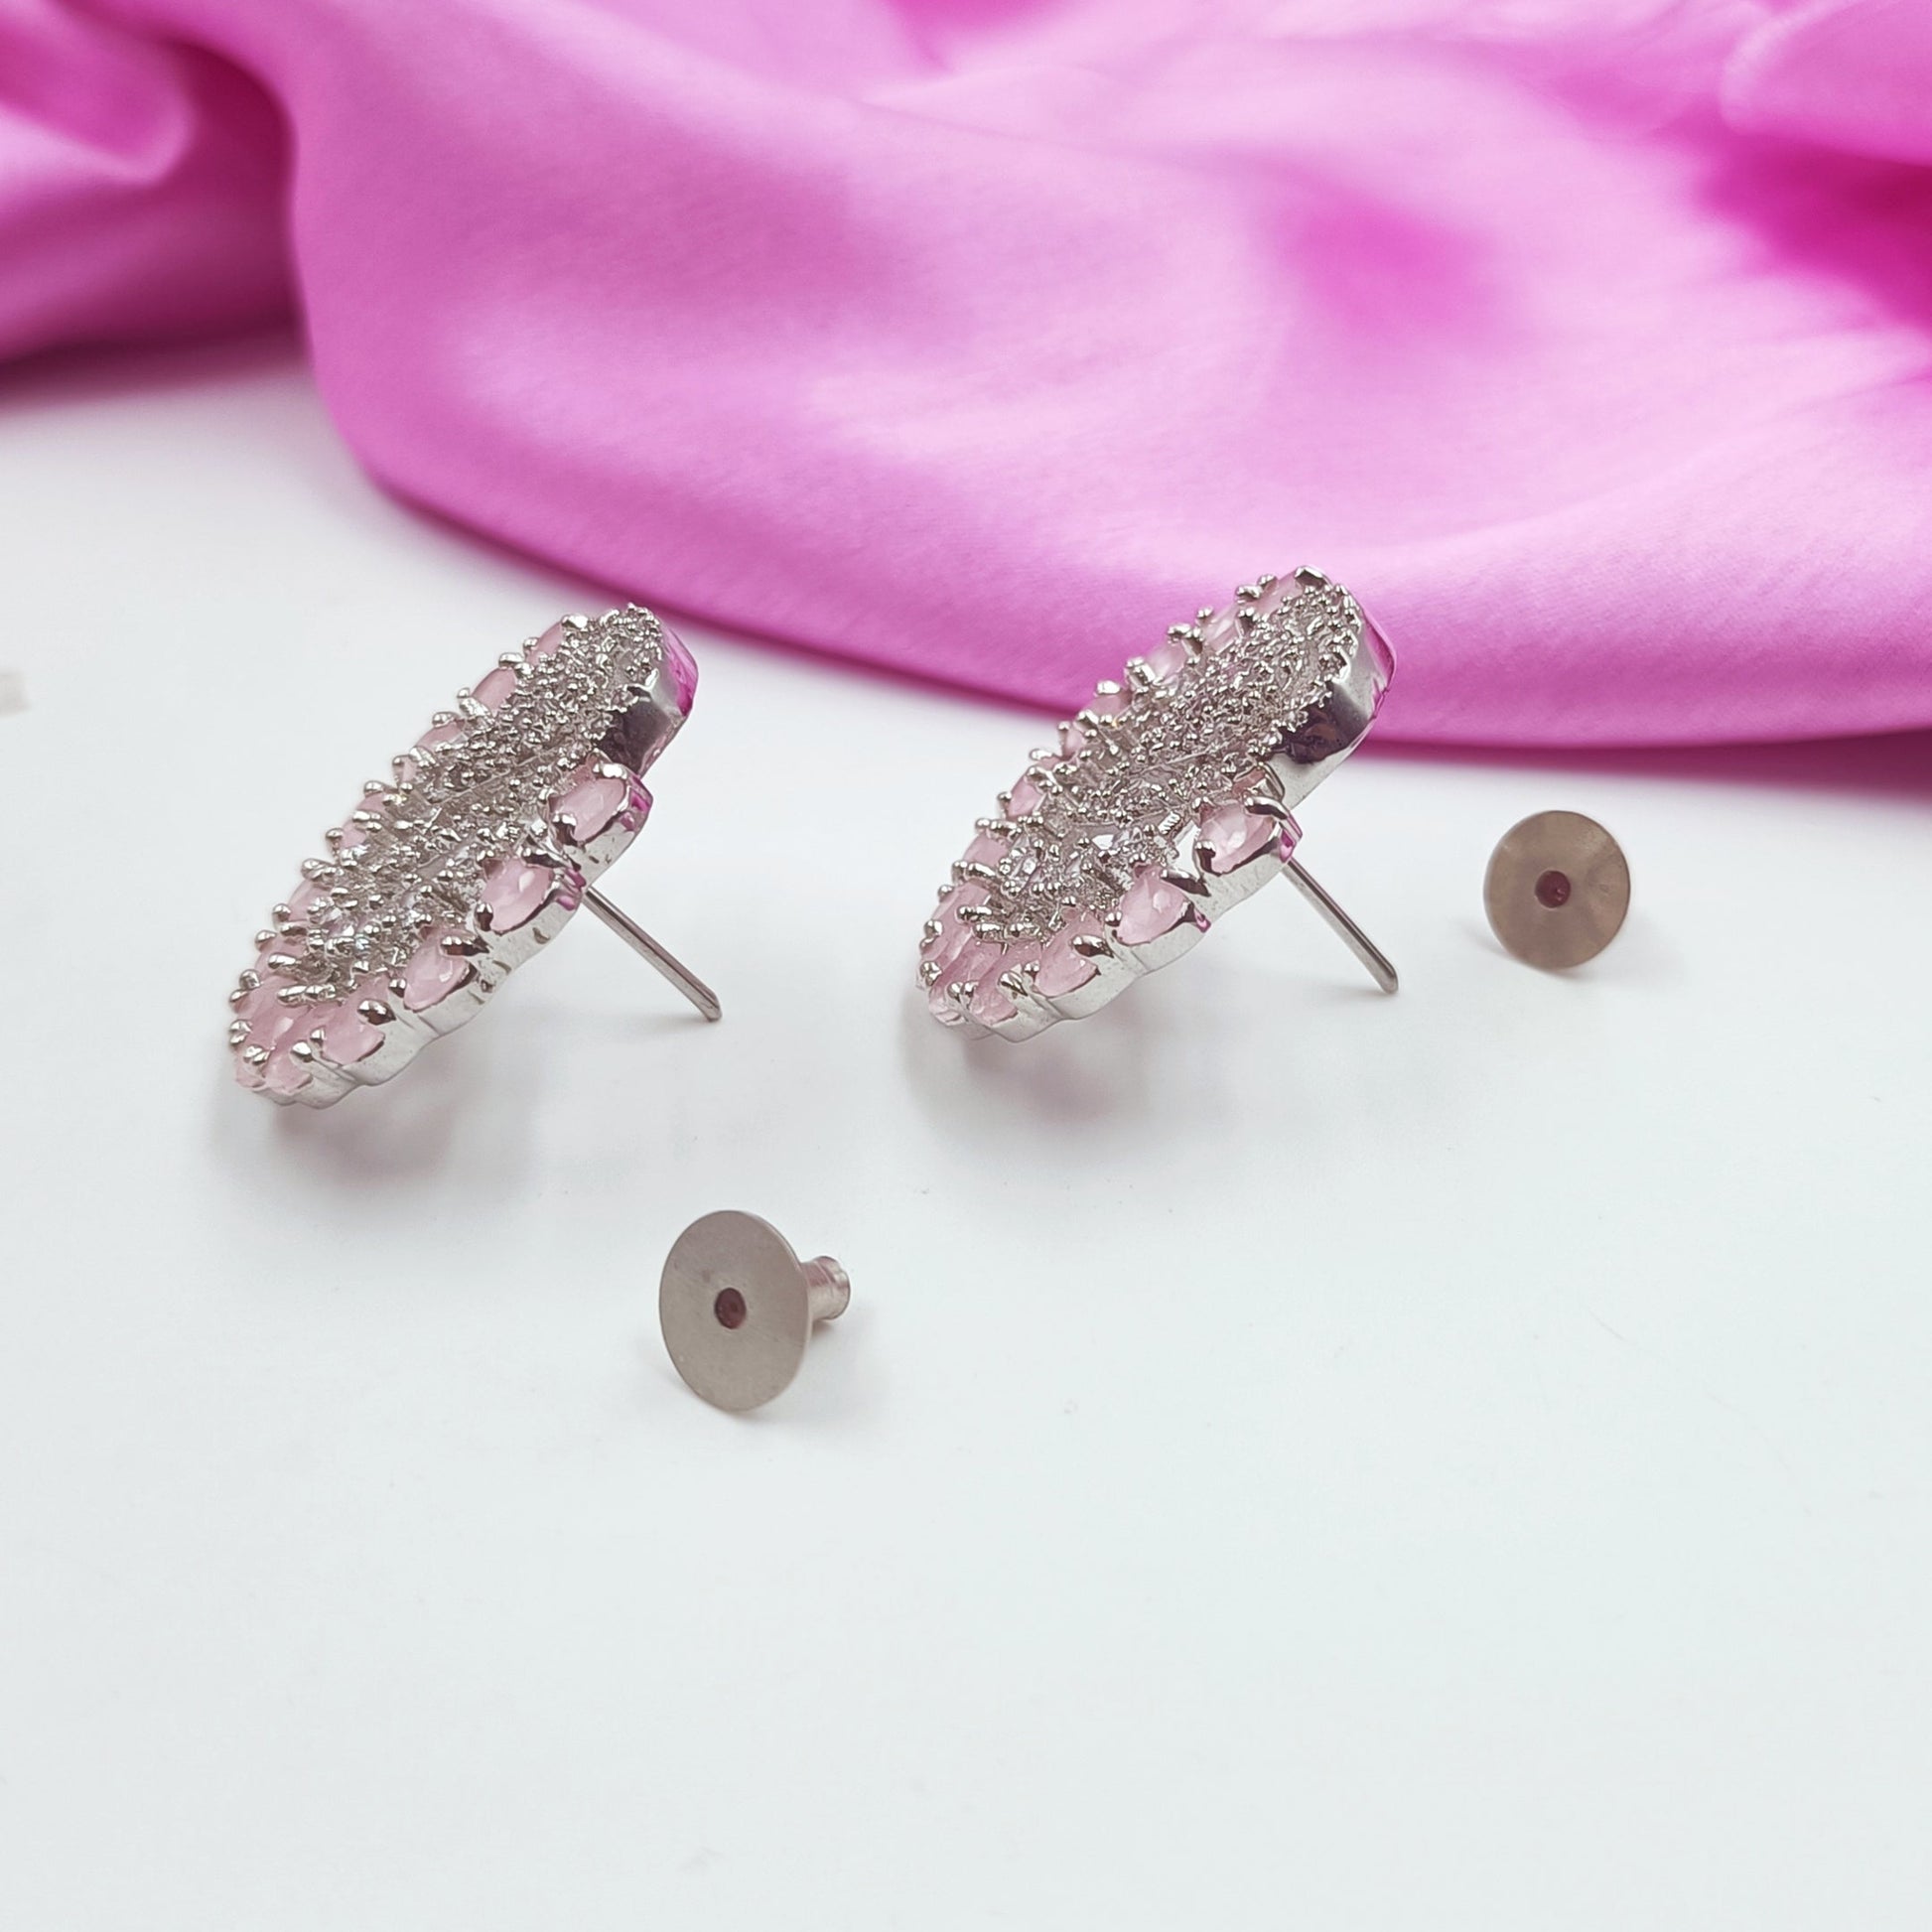 Pecock Fether Design Tops Shree Radhe Pearls